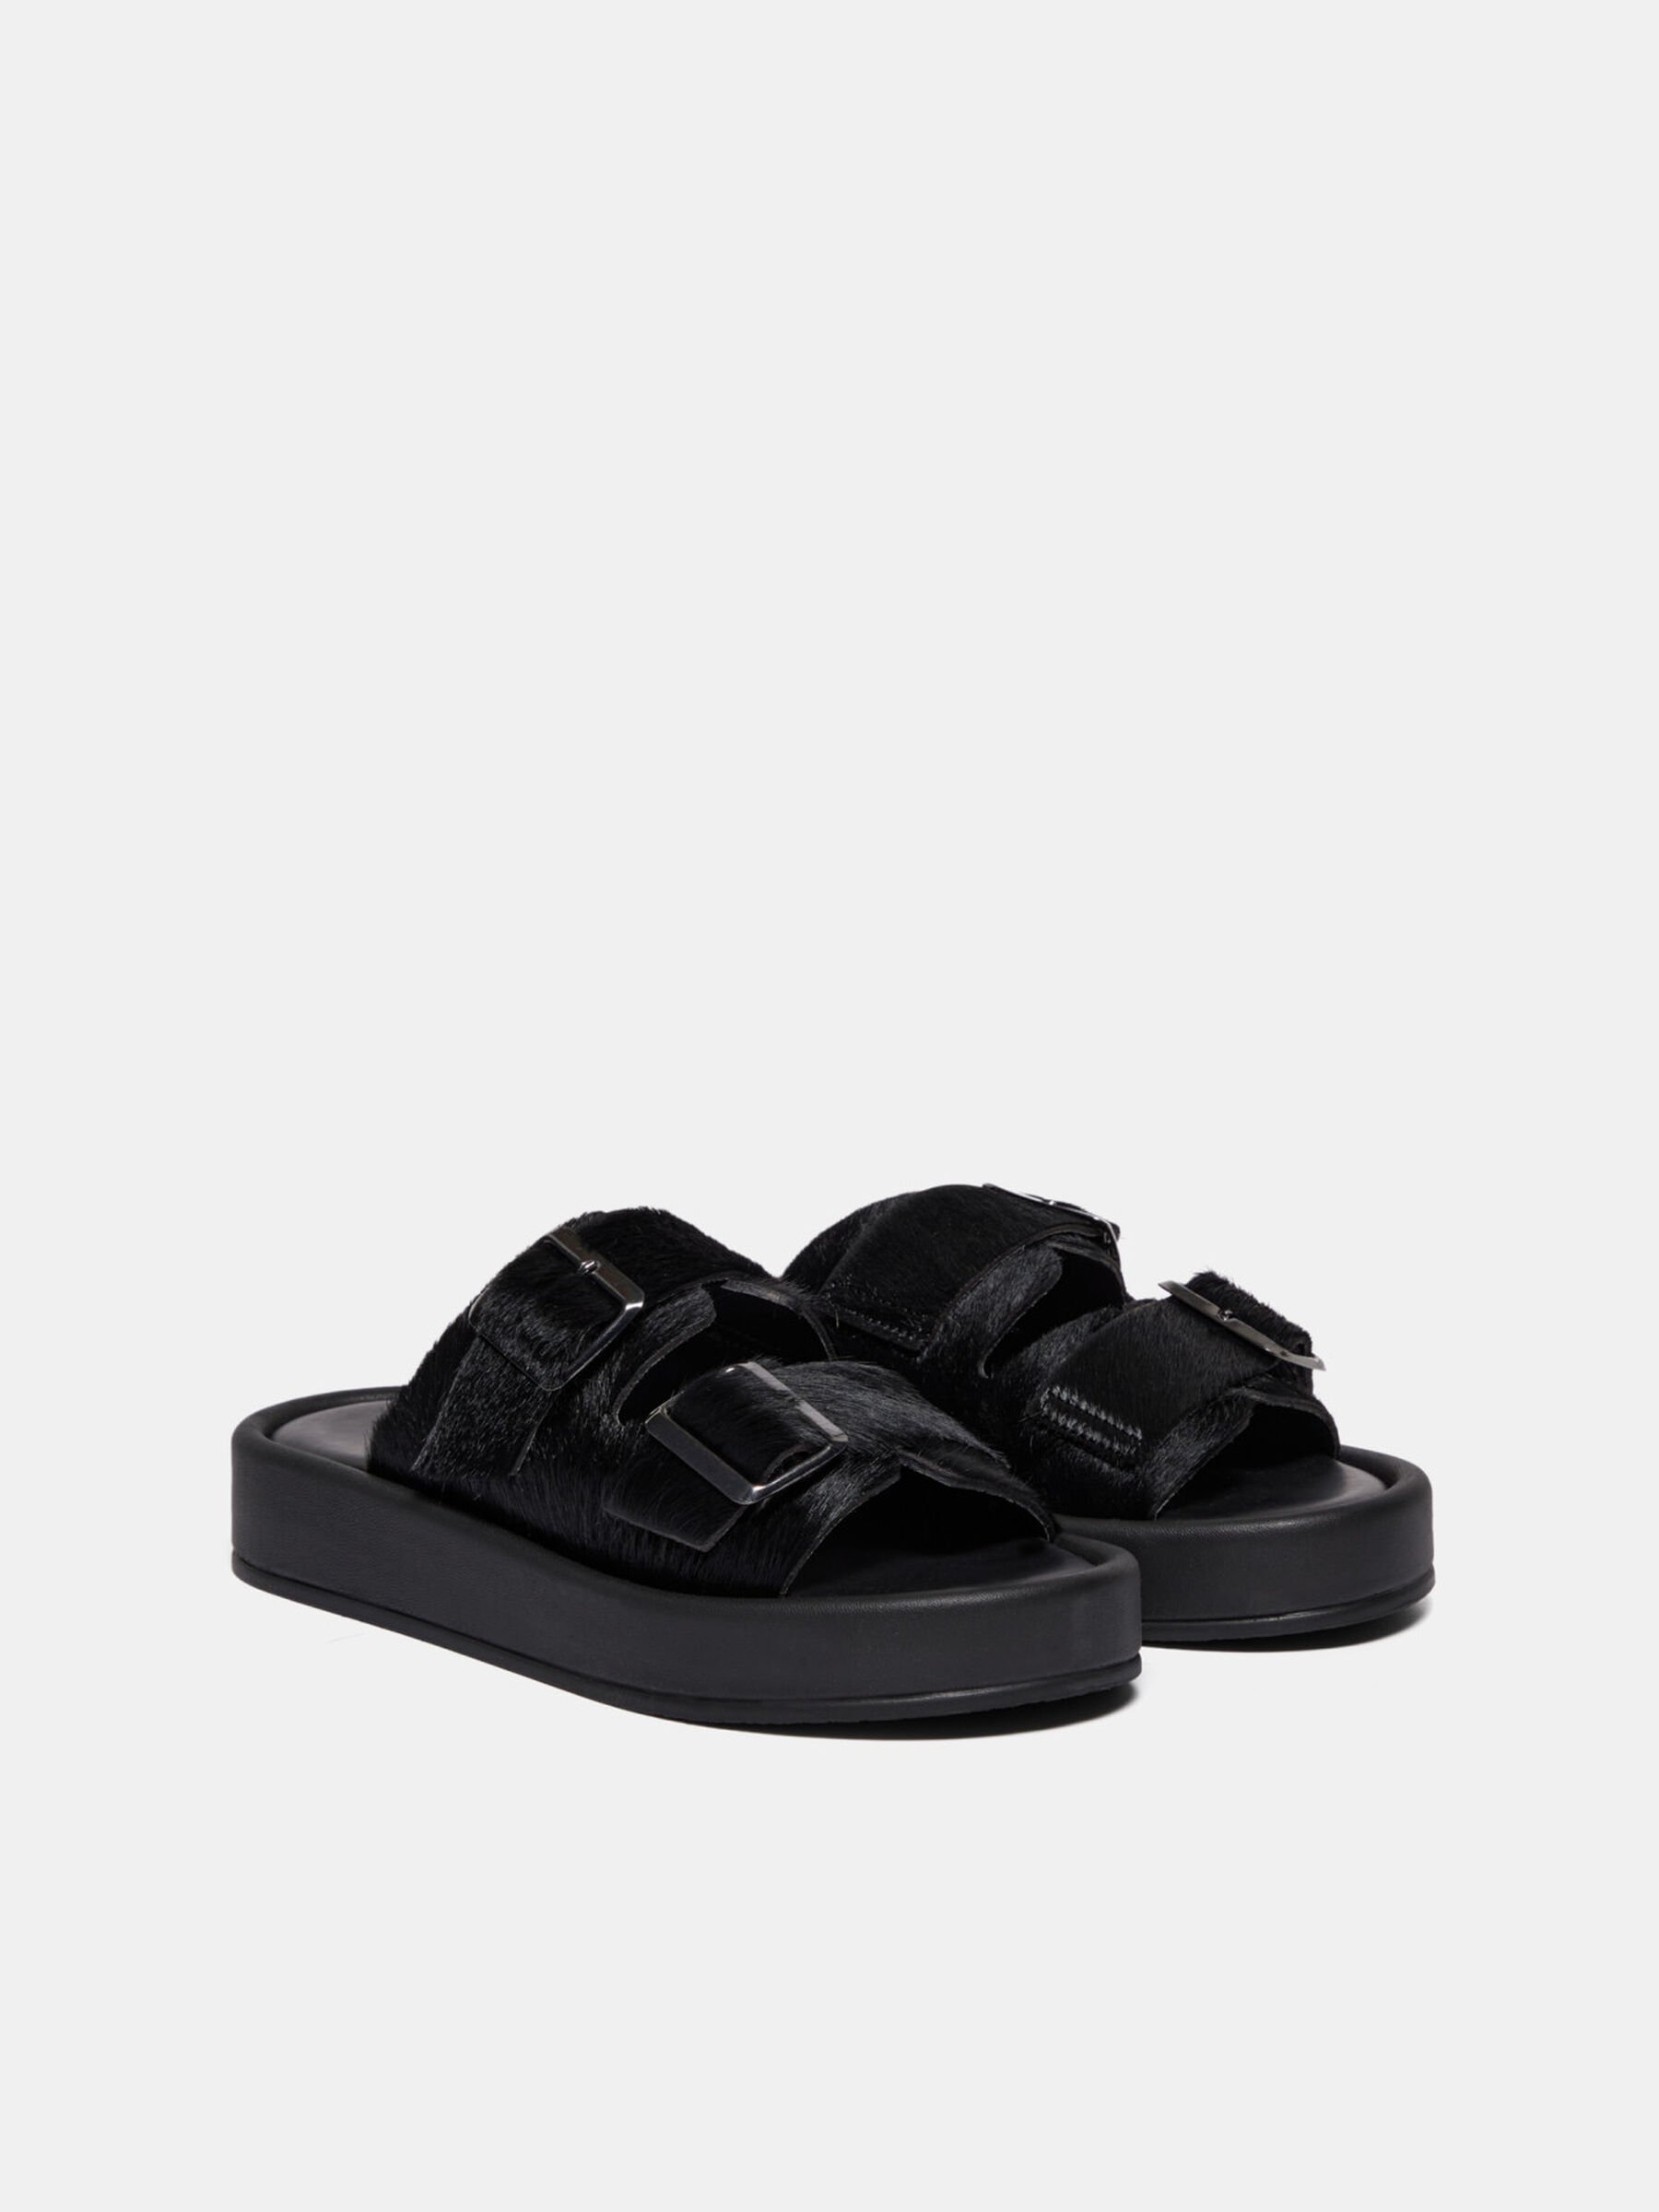 Sandals with calf hair buckles, Black - Sisley